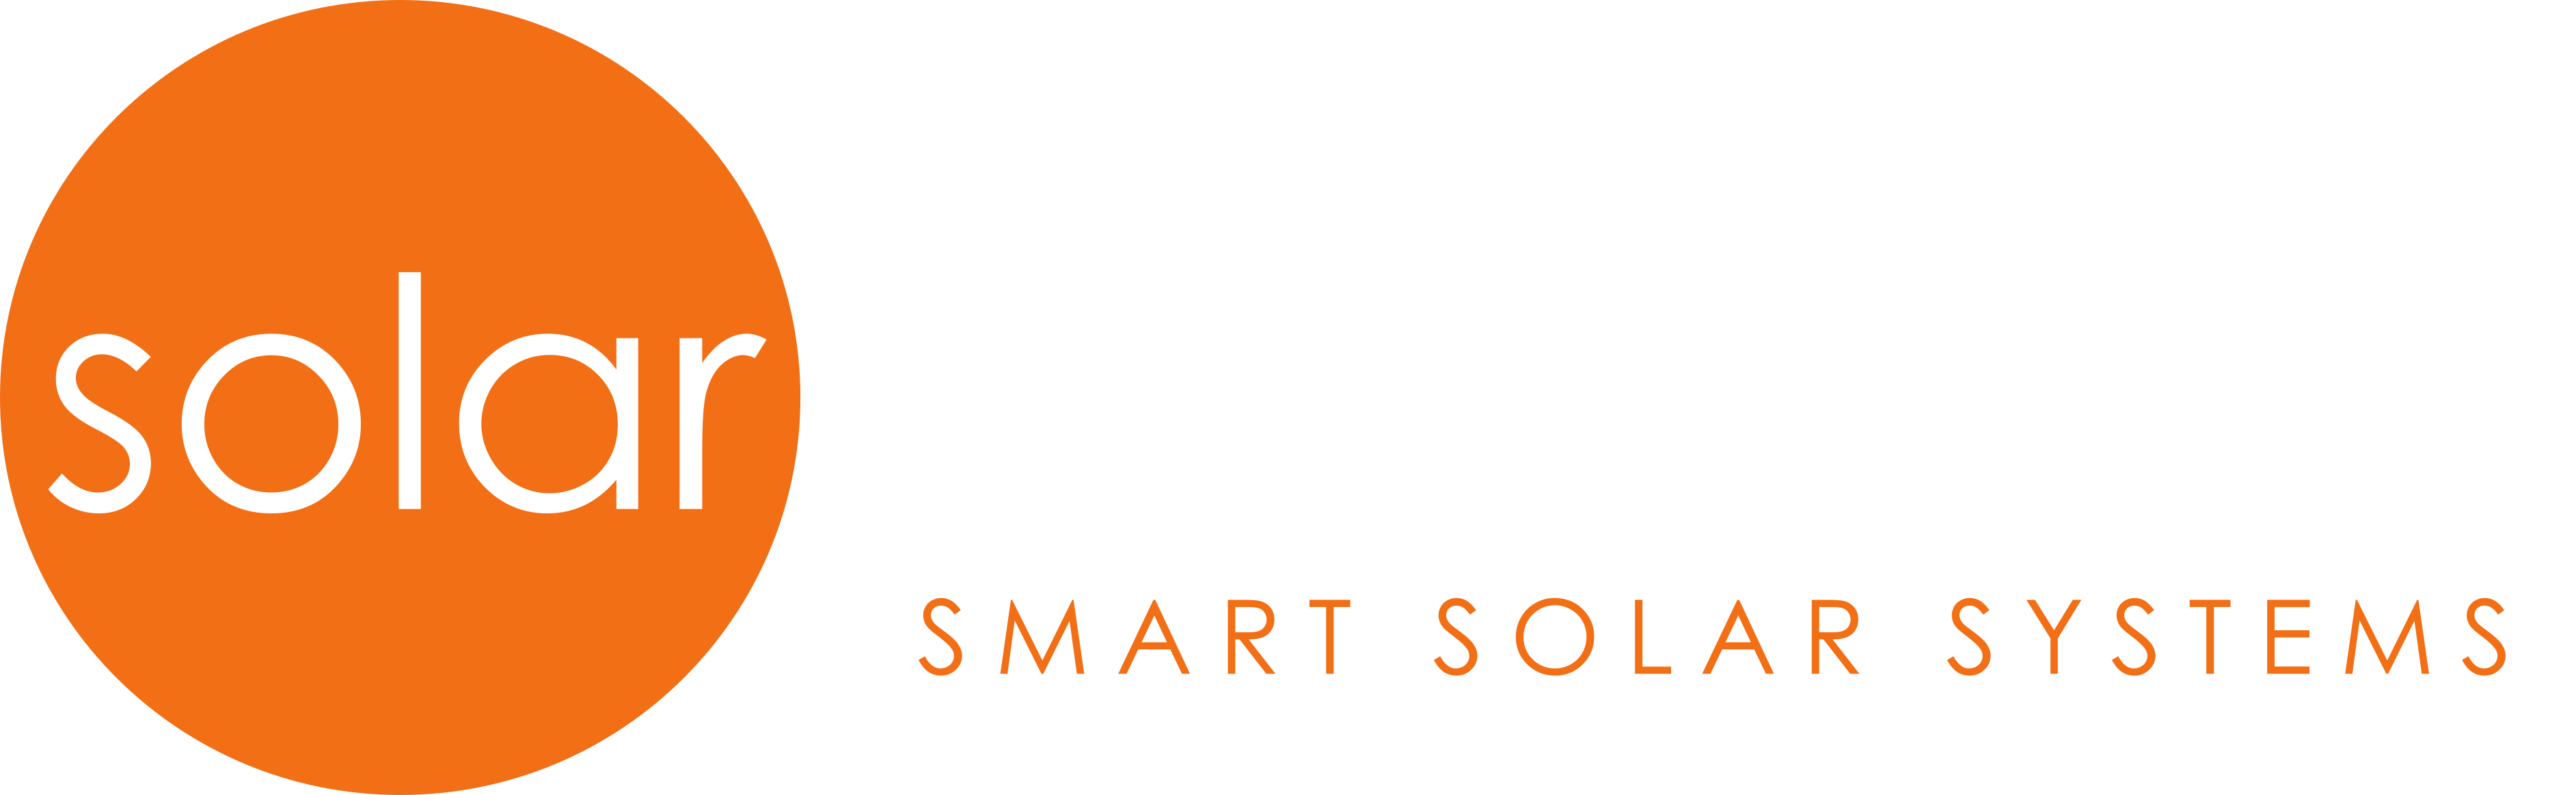 solarconversions_logo